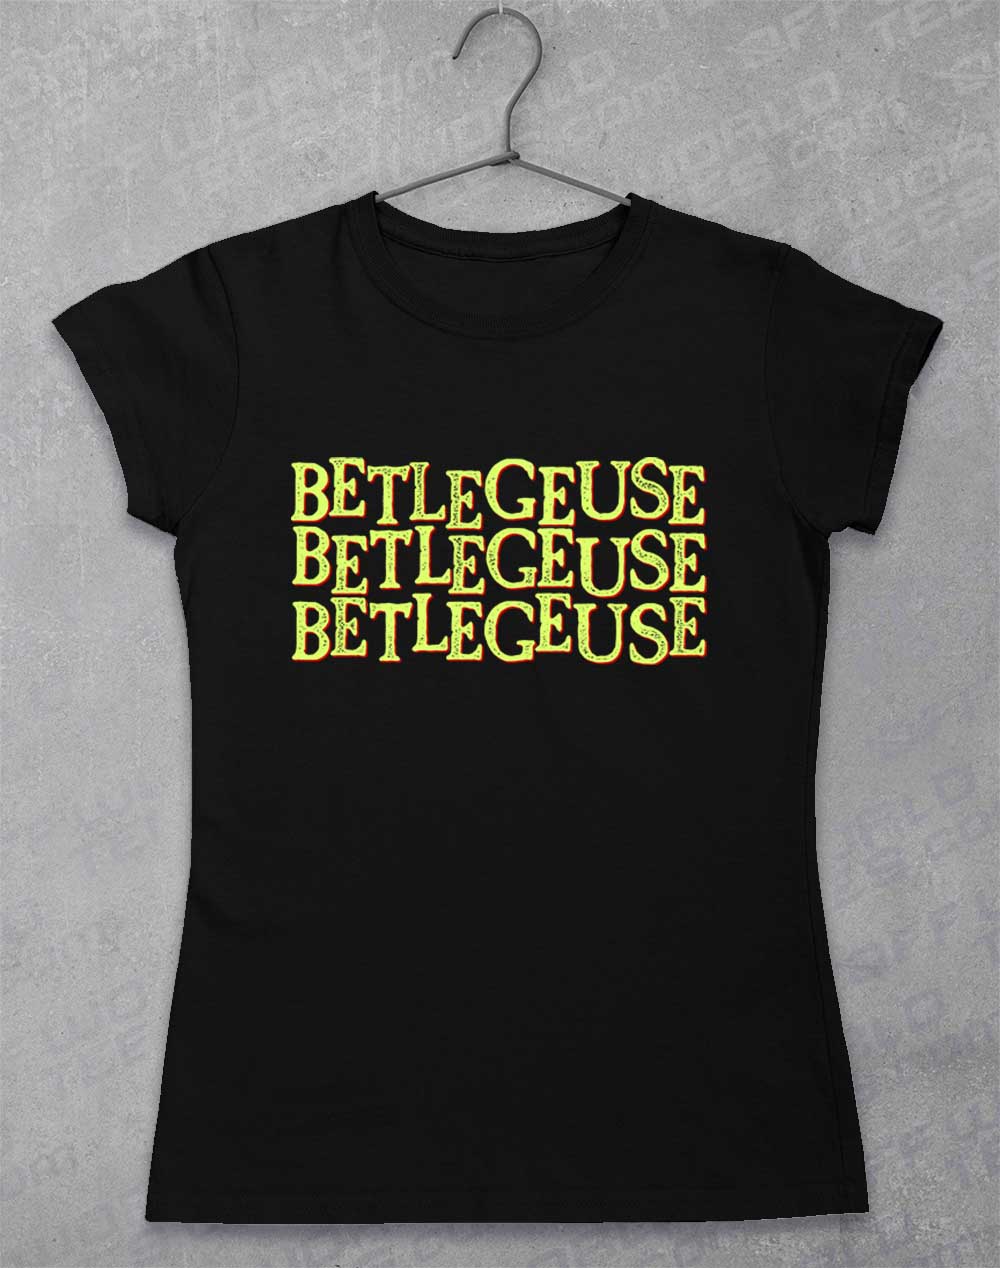 Black - Betelgeuse Betelgeuse Betelgeuse Women's T-Shirt